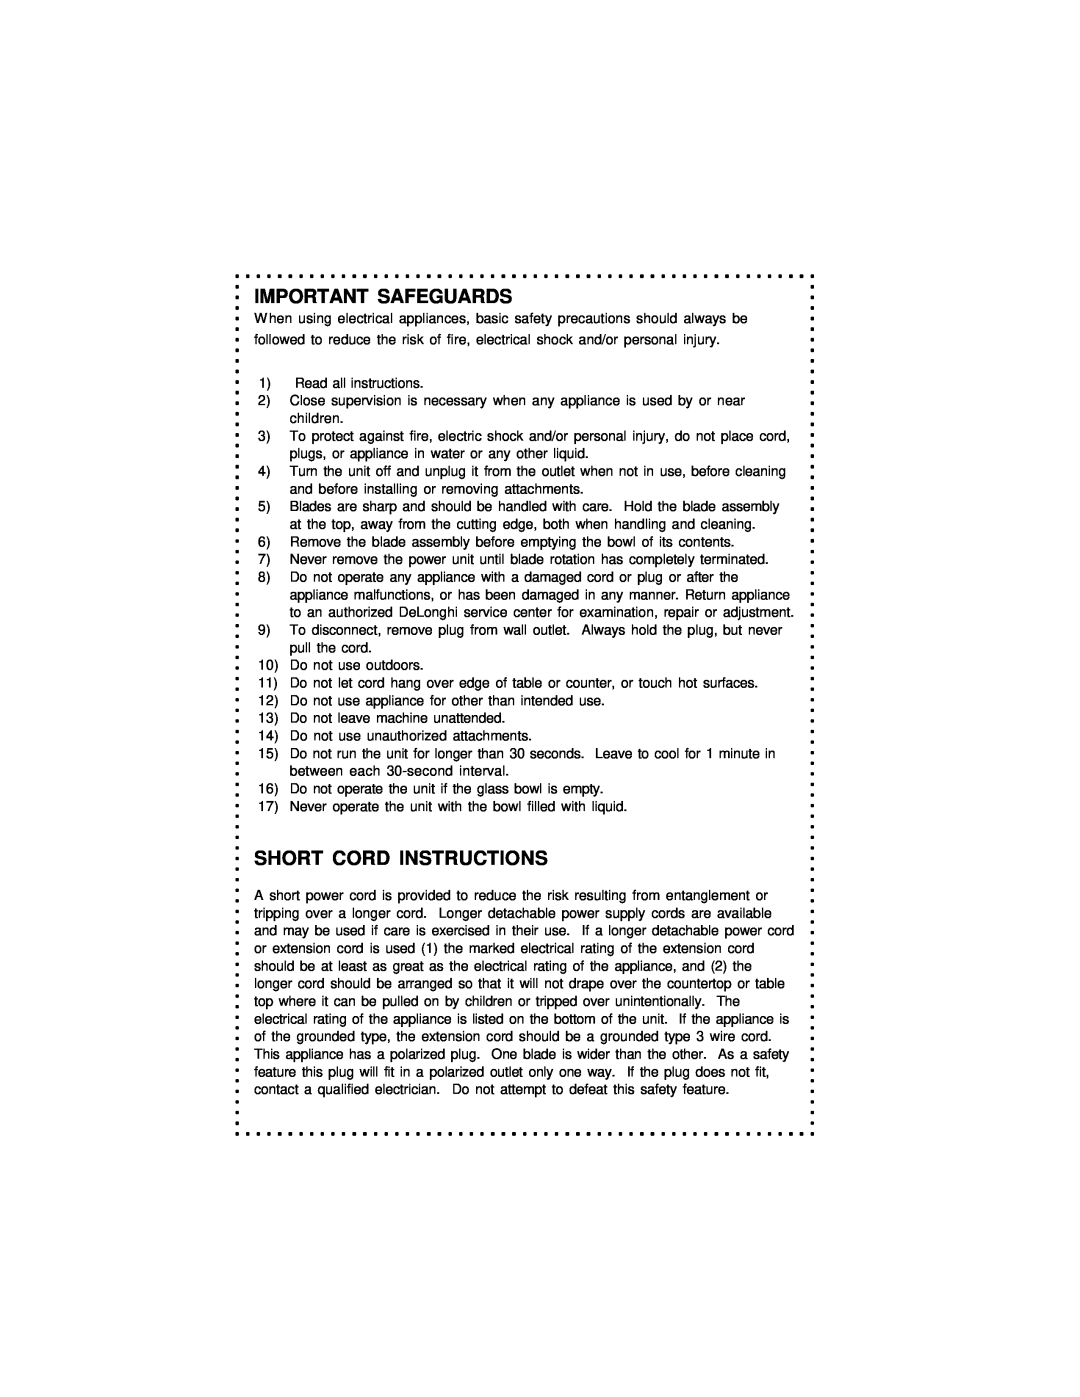 DeLonghi DCP400 instruction manual Important Safeguards, Short Cord Instructions 